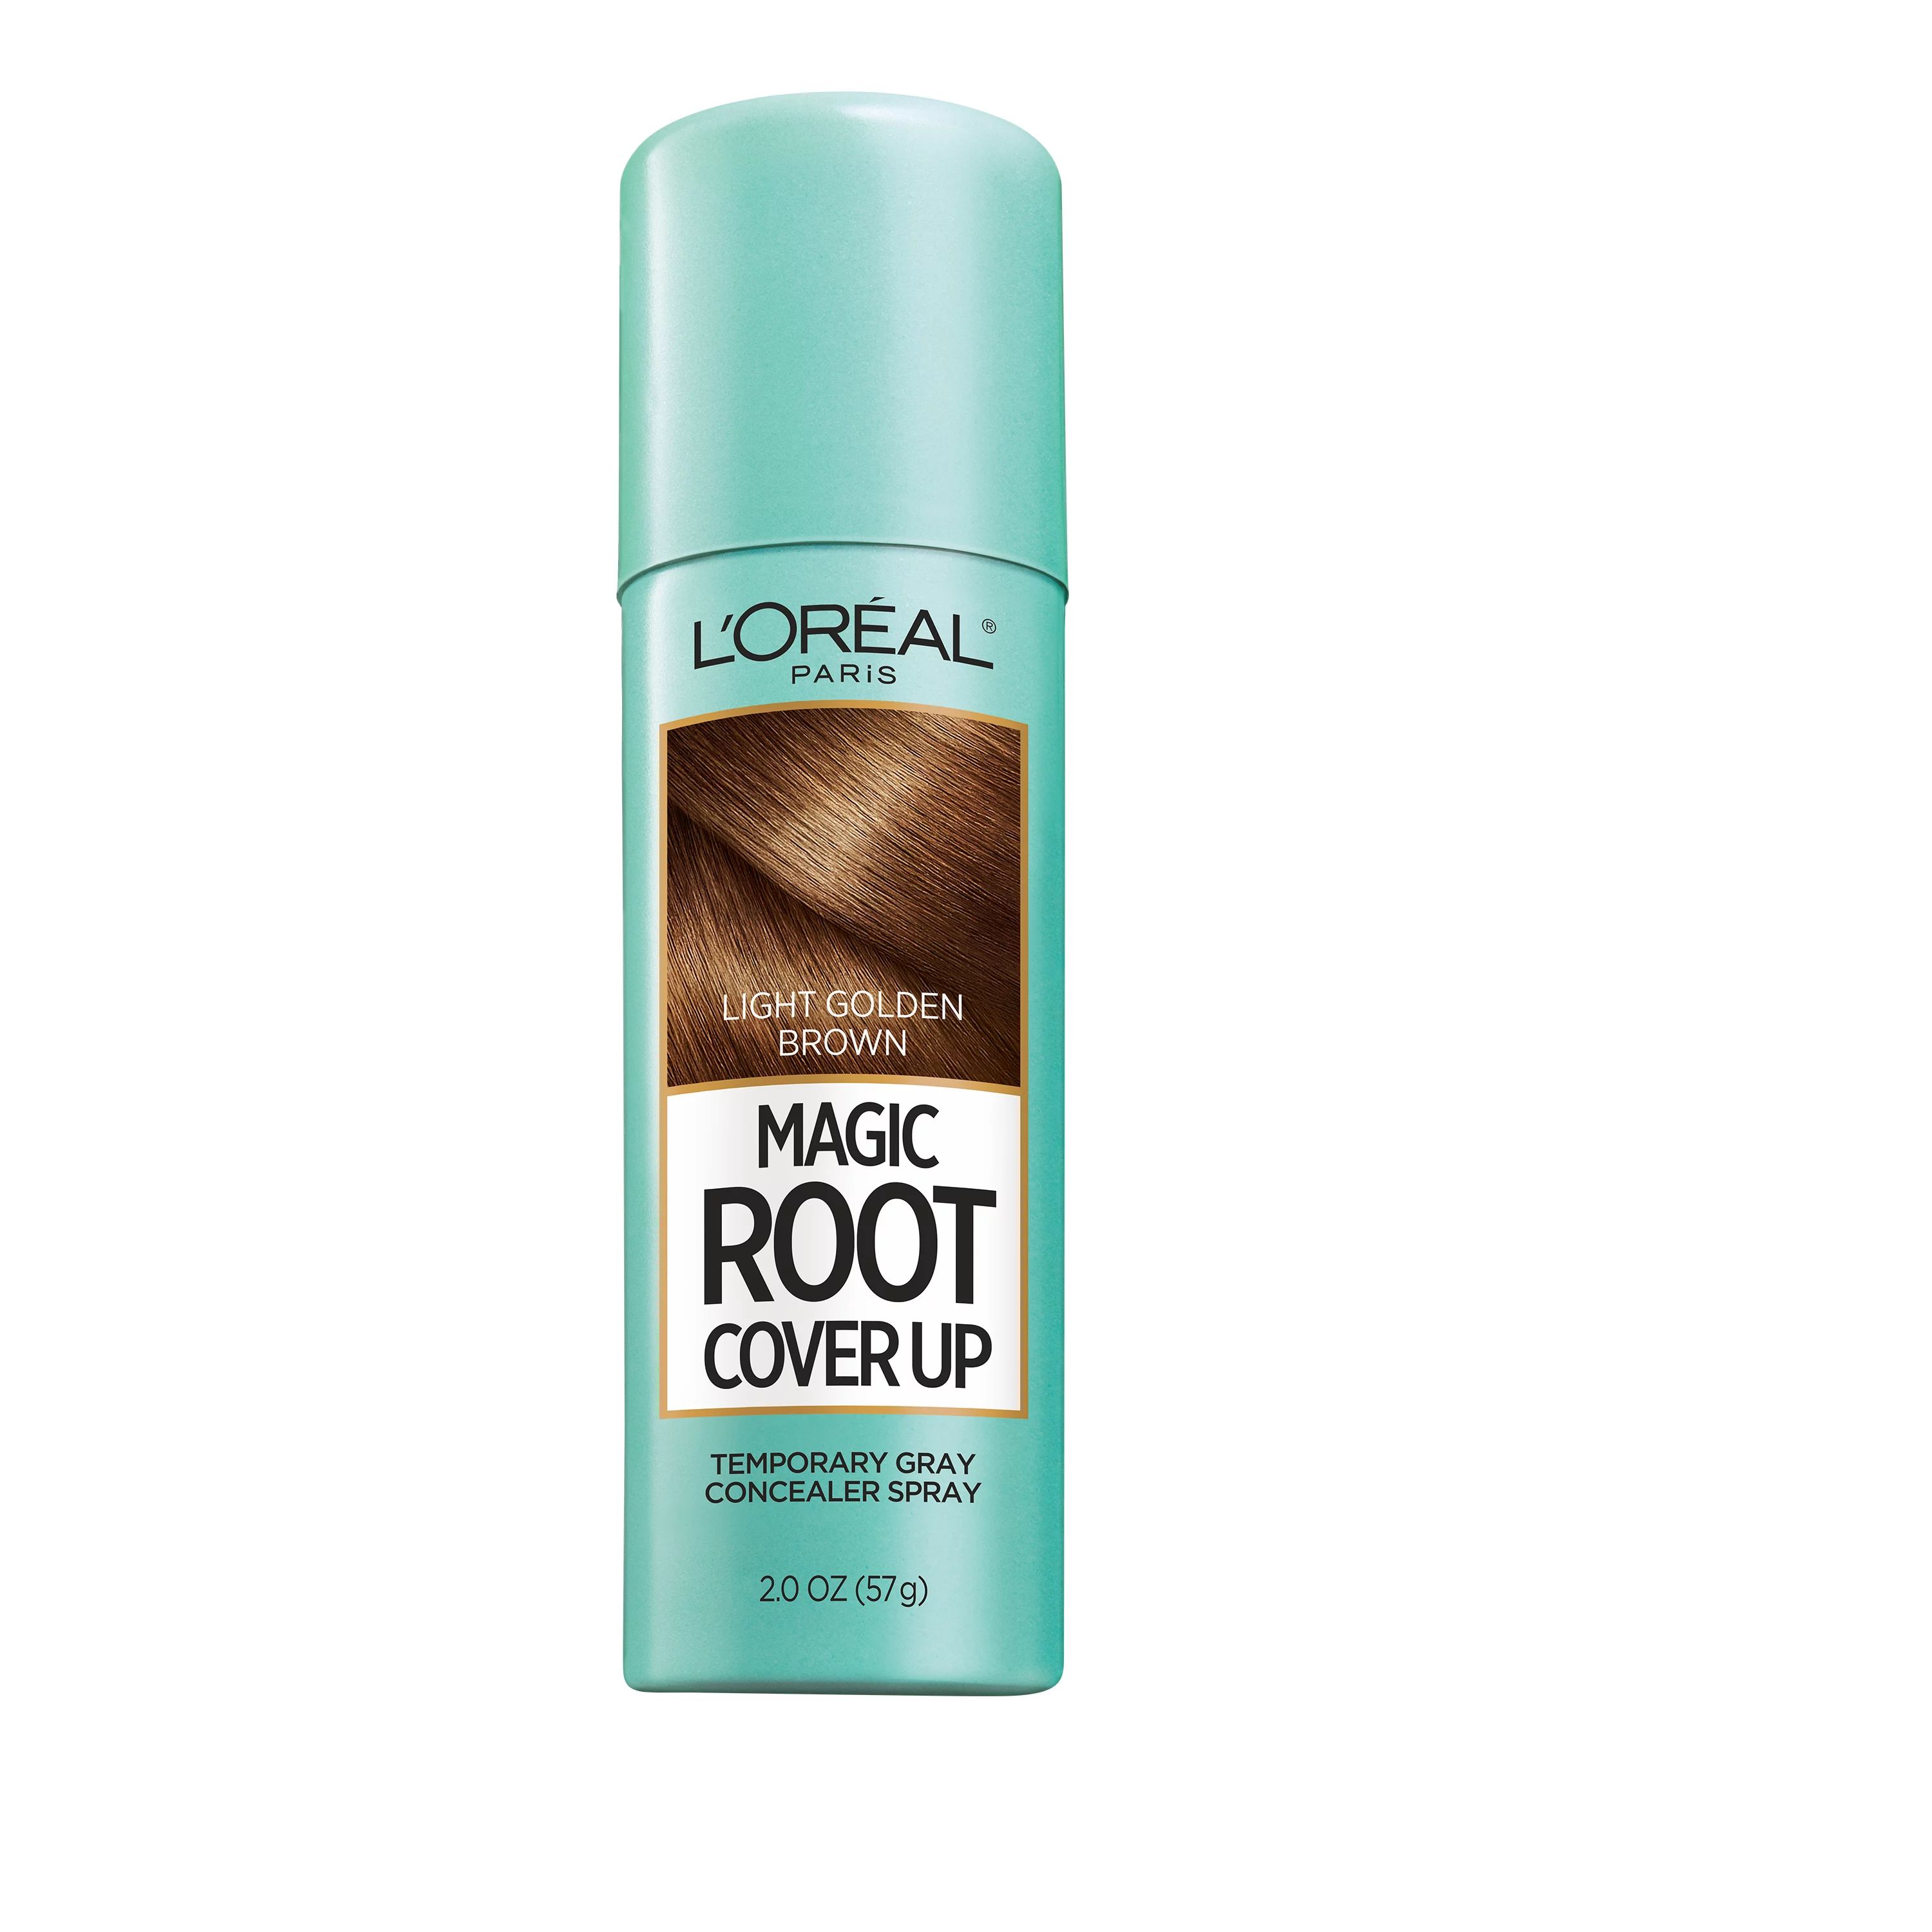 L'Oreal Paris Magic Root Cover Up Concealer Spray, Light Golden Brown, 2 oz | Walmart (US)